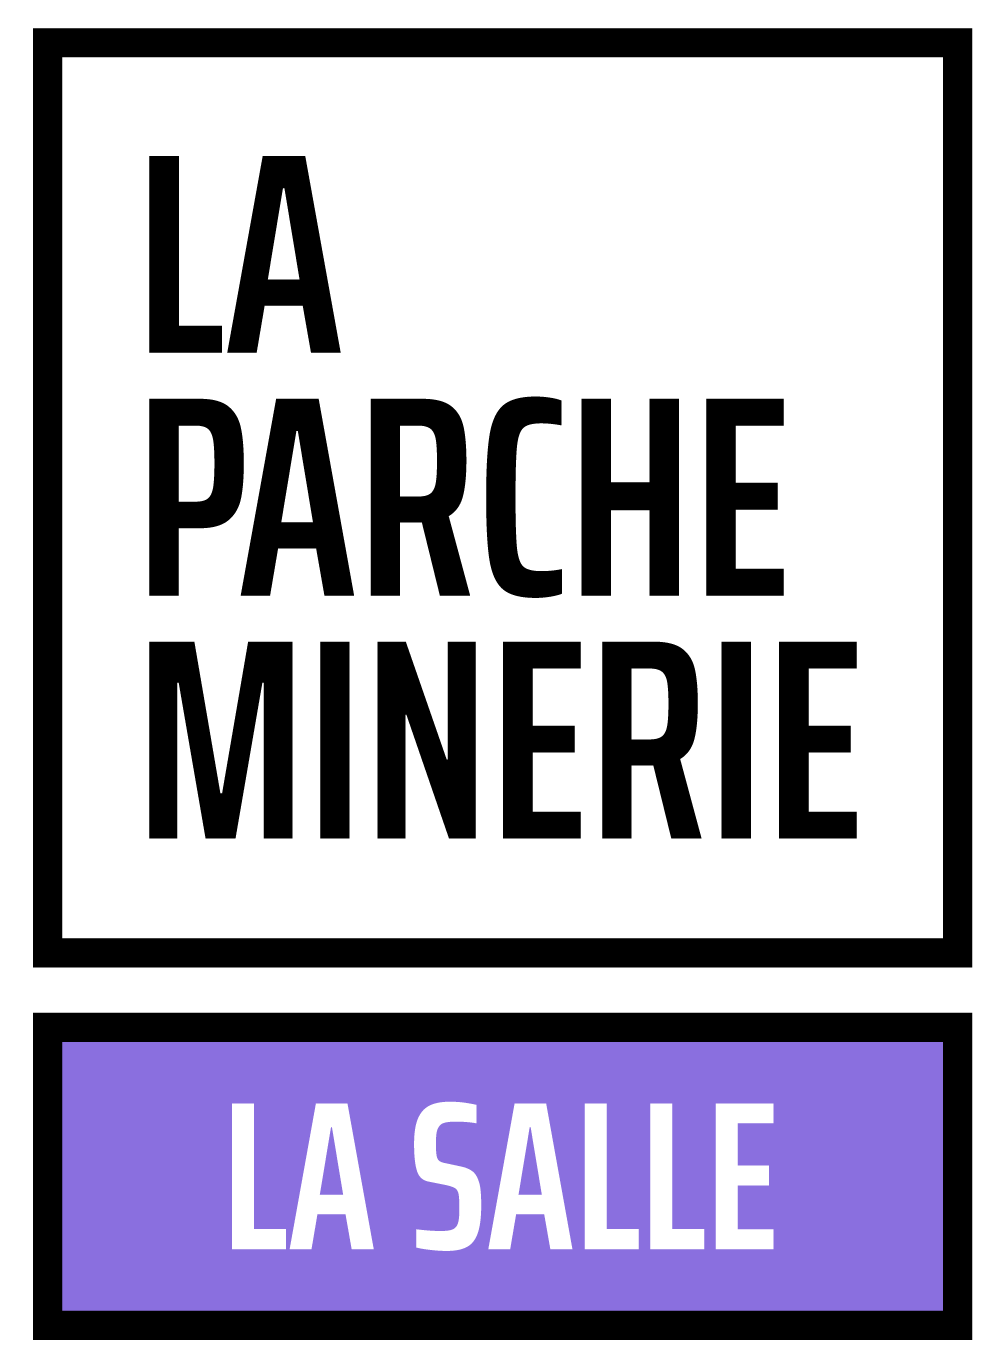 lasalle_logo_parcheminerie